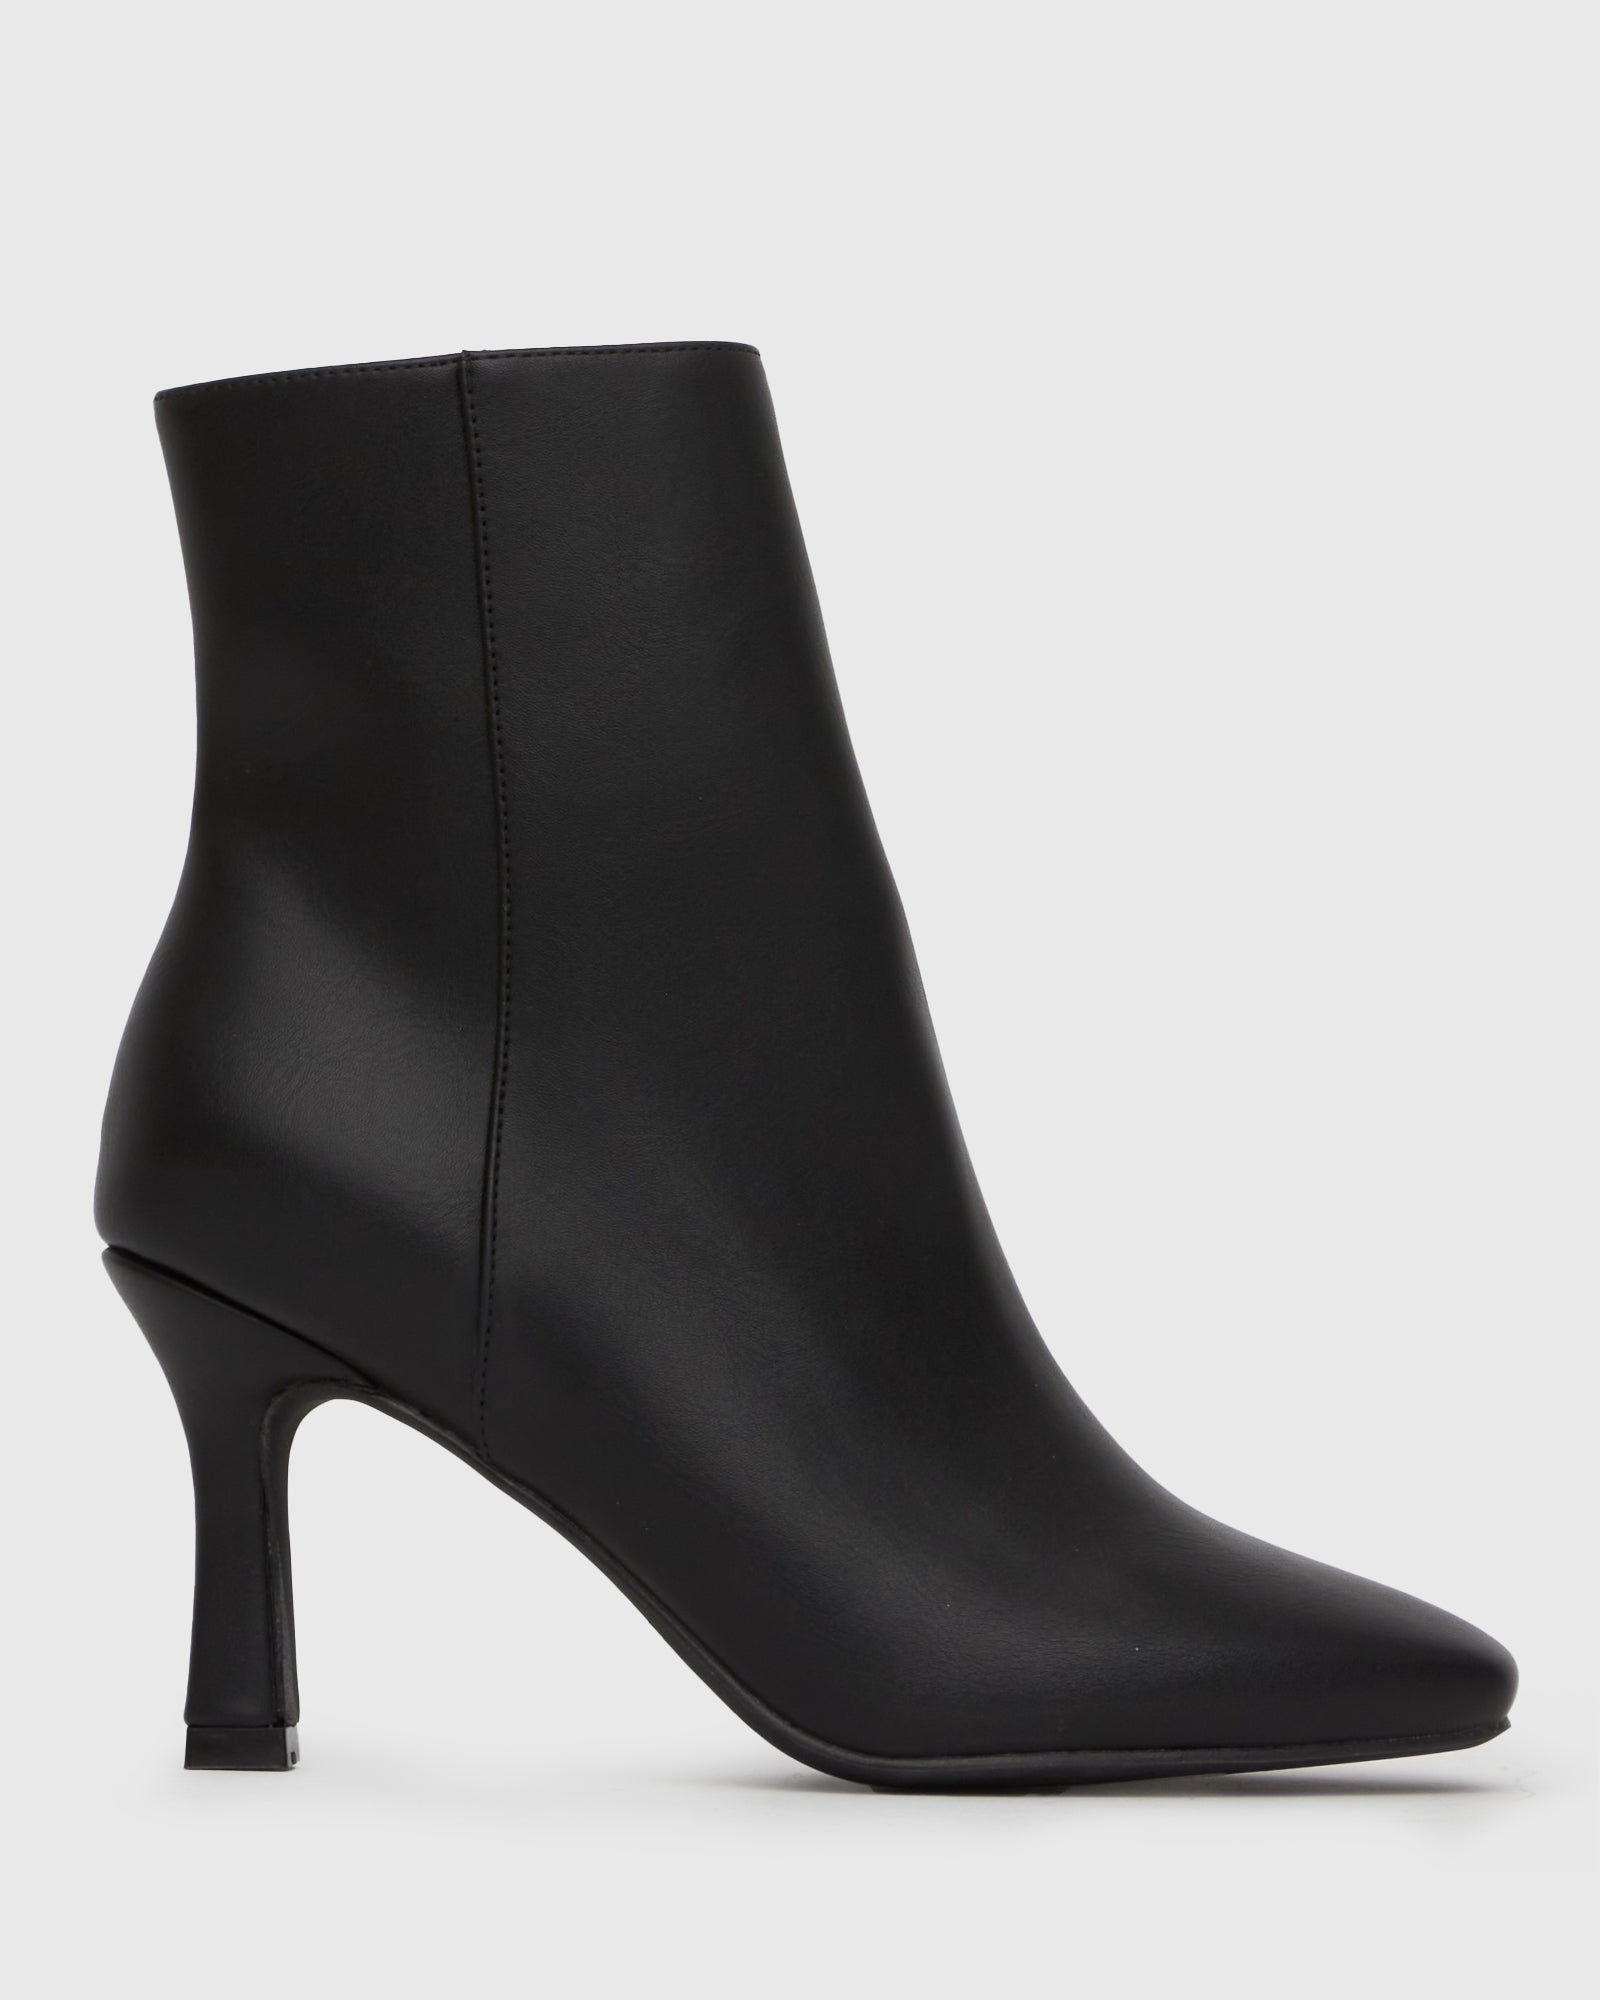 Buy MINI Stiletto Heel Ankle Boots by Betts online - Betts